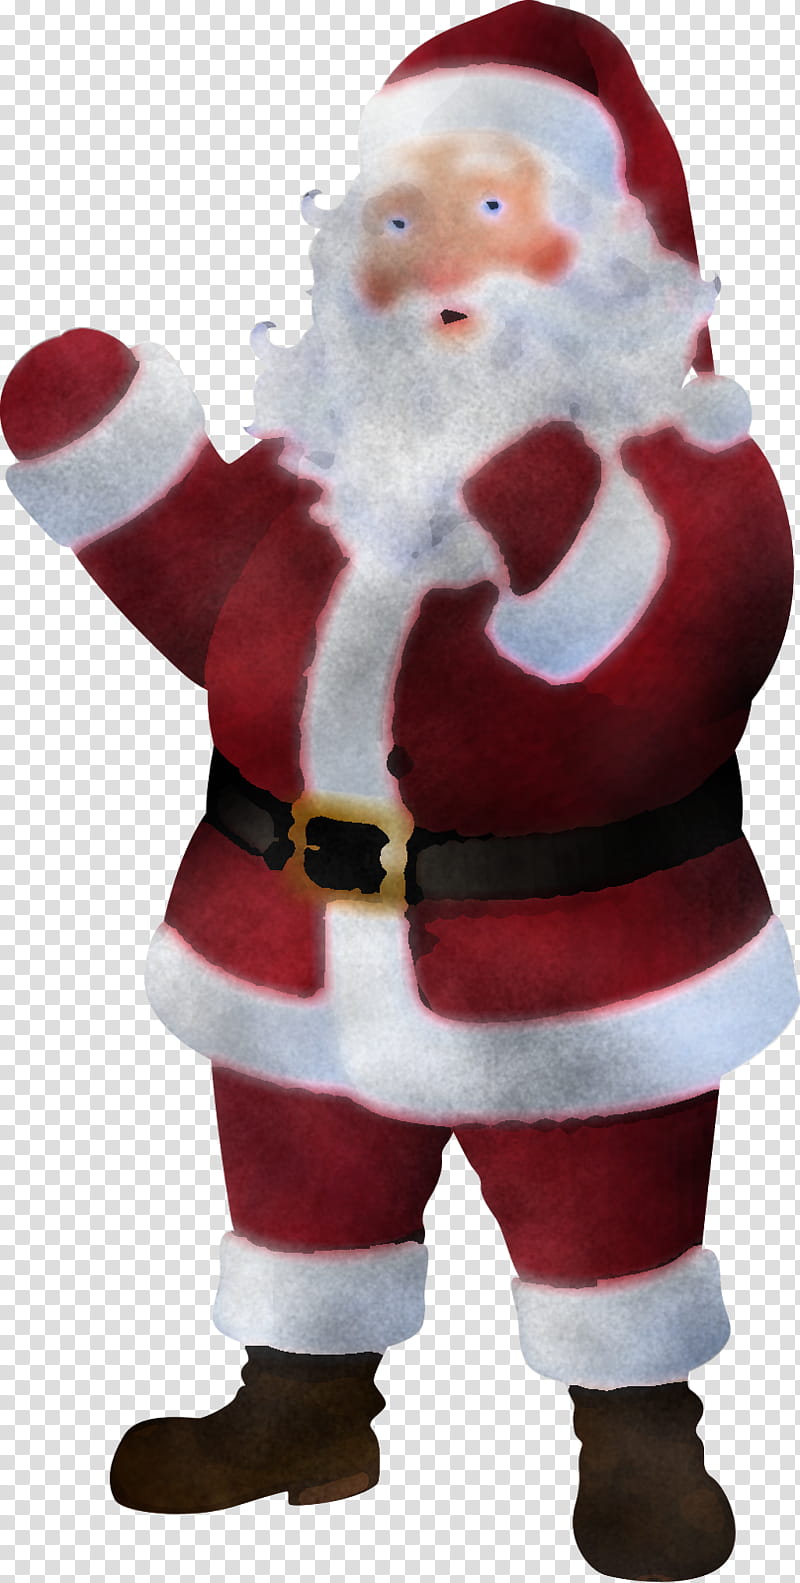 Santa claus, Figurine, Holiday Ornament, Christmas Decoration, Toy, Decorative Nutcracker, Christmas Ornament, Interior Design transparent background PNG clipart